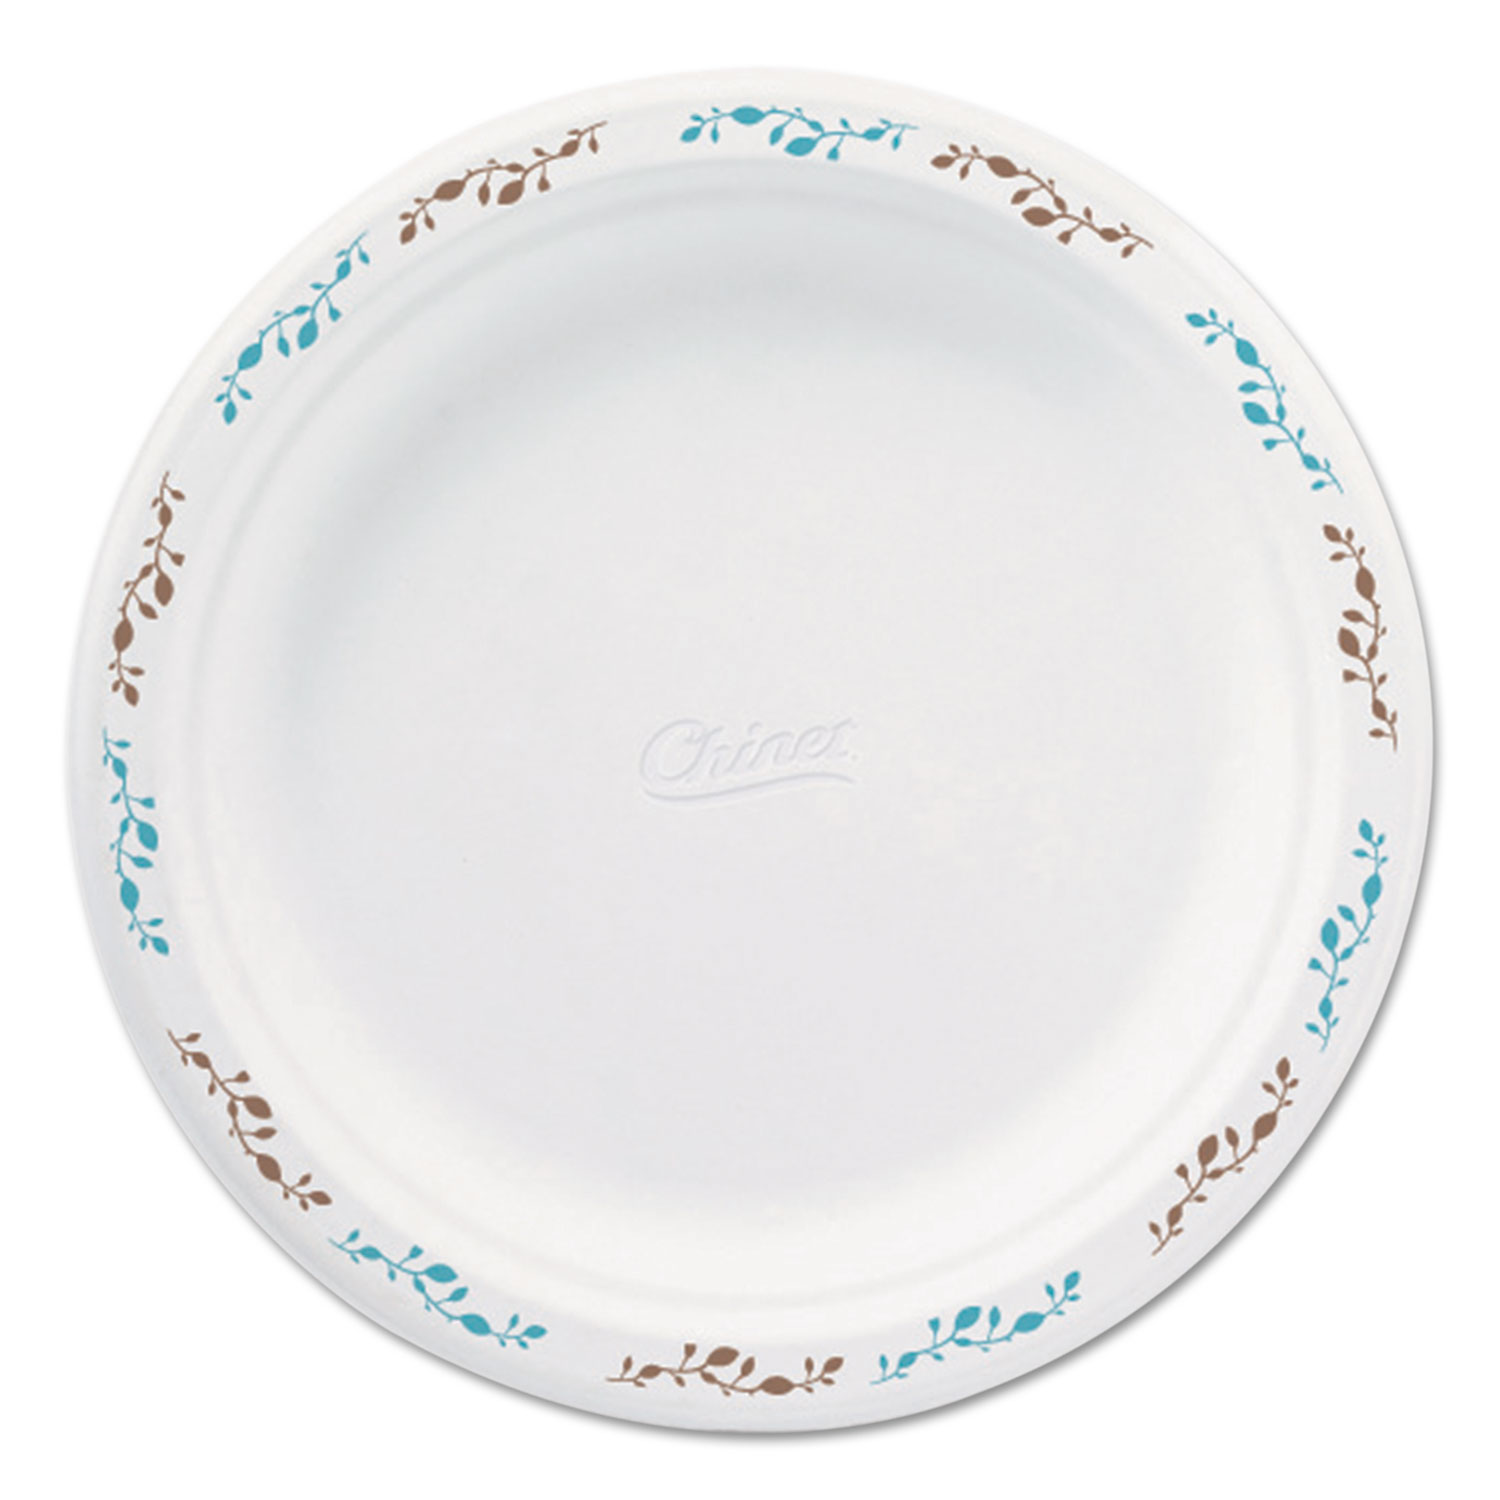  Chinet 22516 Molded Fiber Dinnerware, Plate, 8 3/4Dia, White, Vines Theme, 500/Carton (HUH22516) 